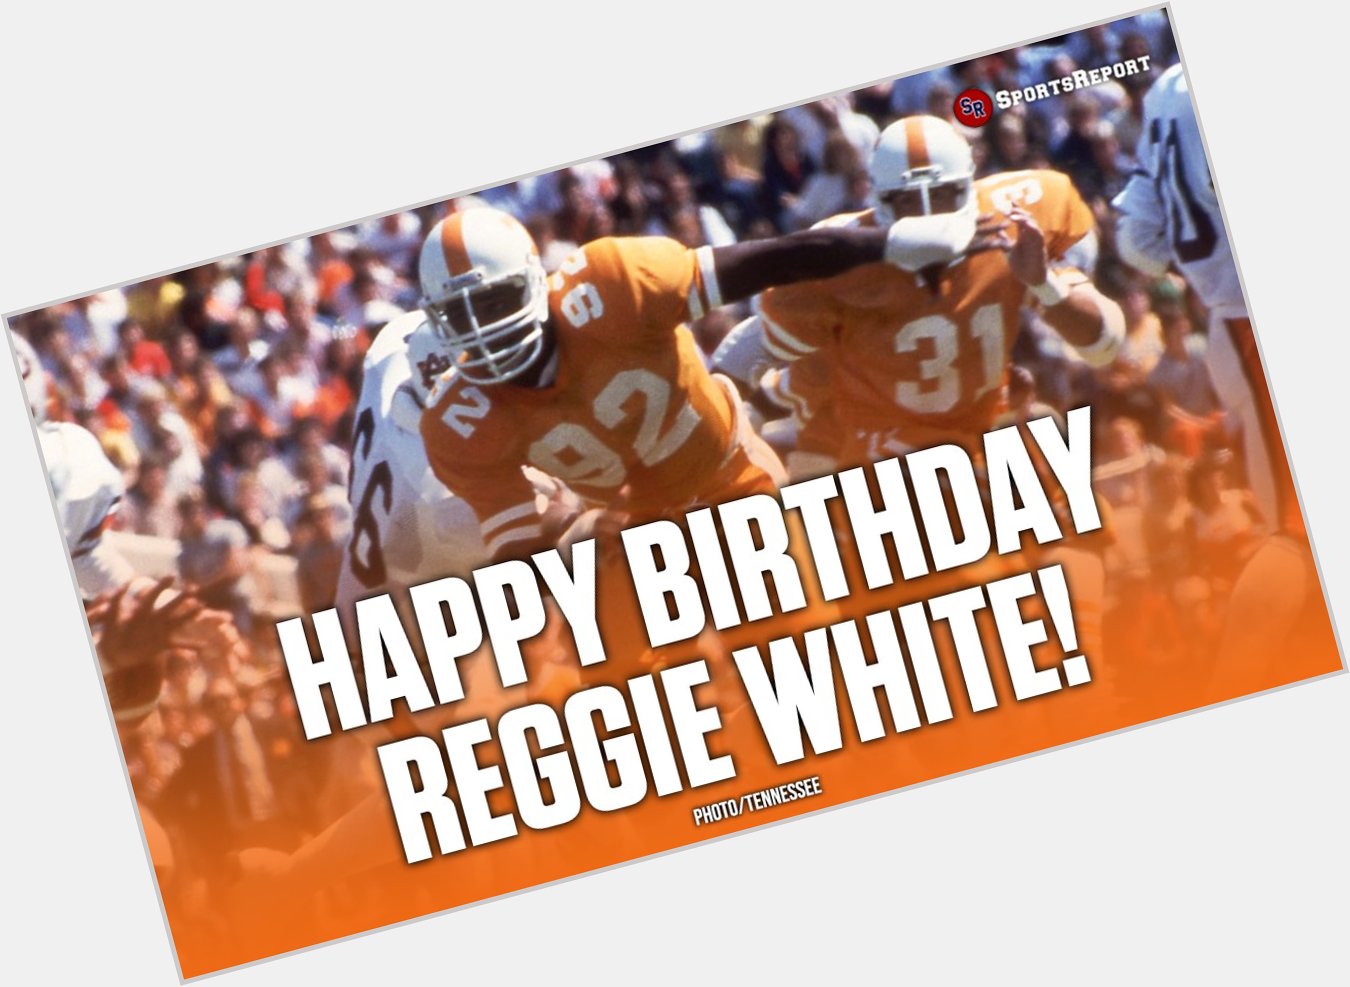 Happy Birthday (forever) to legend, Reggie White! 